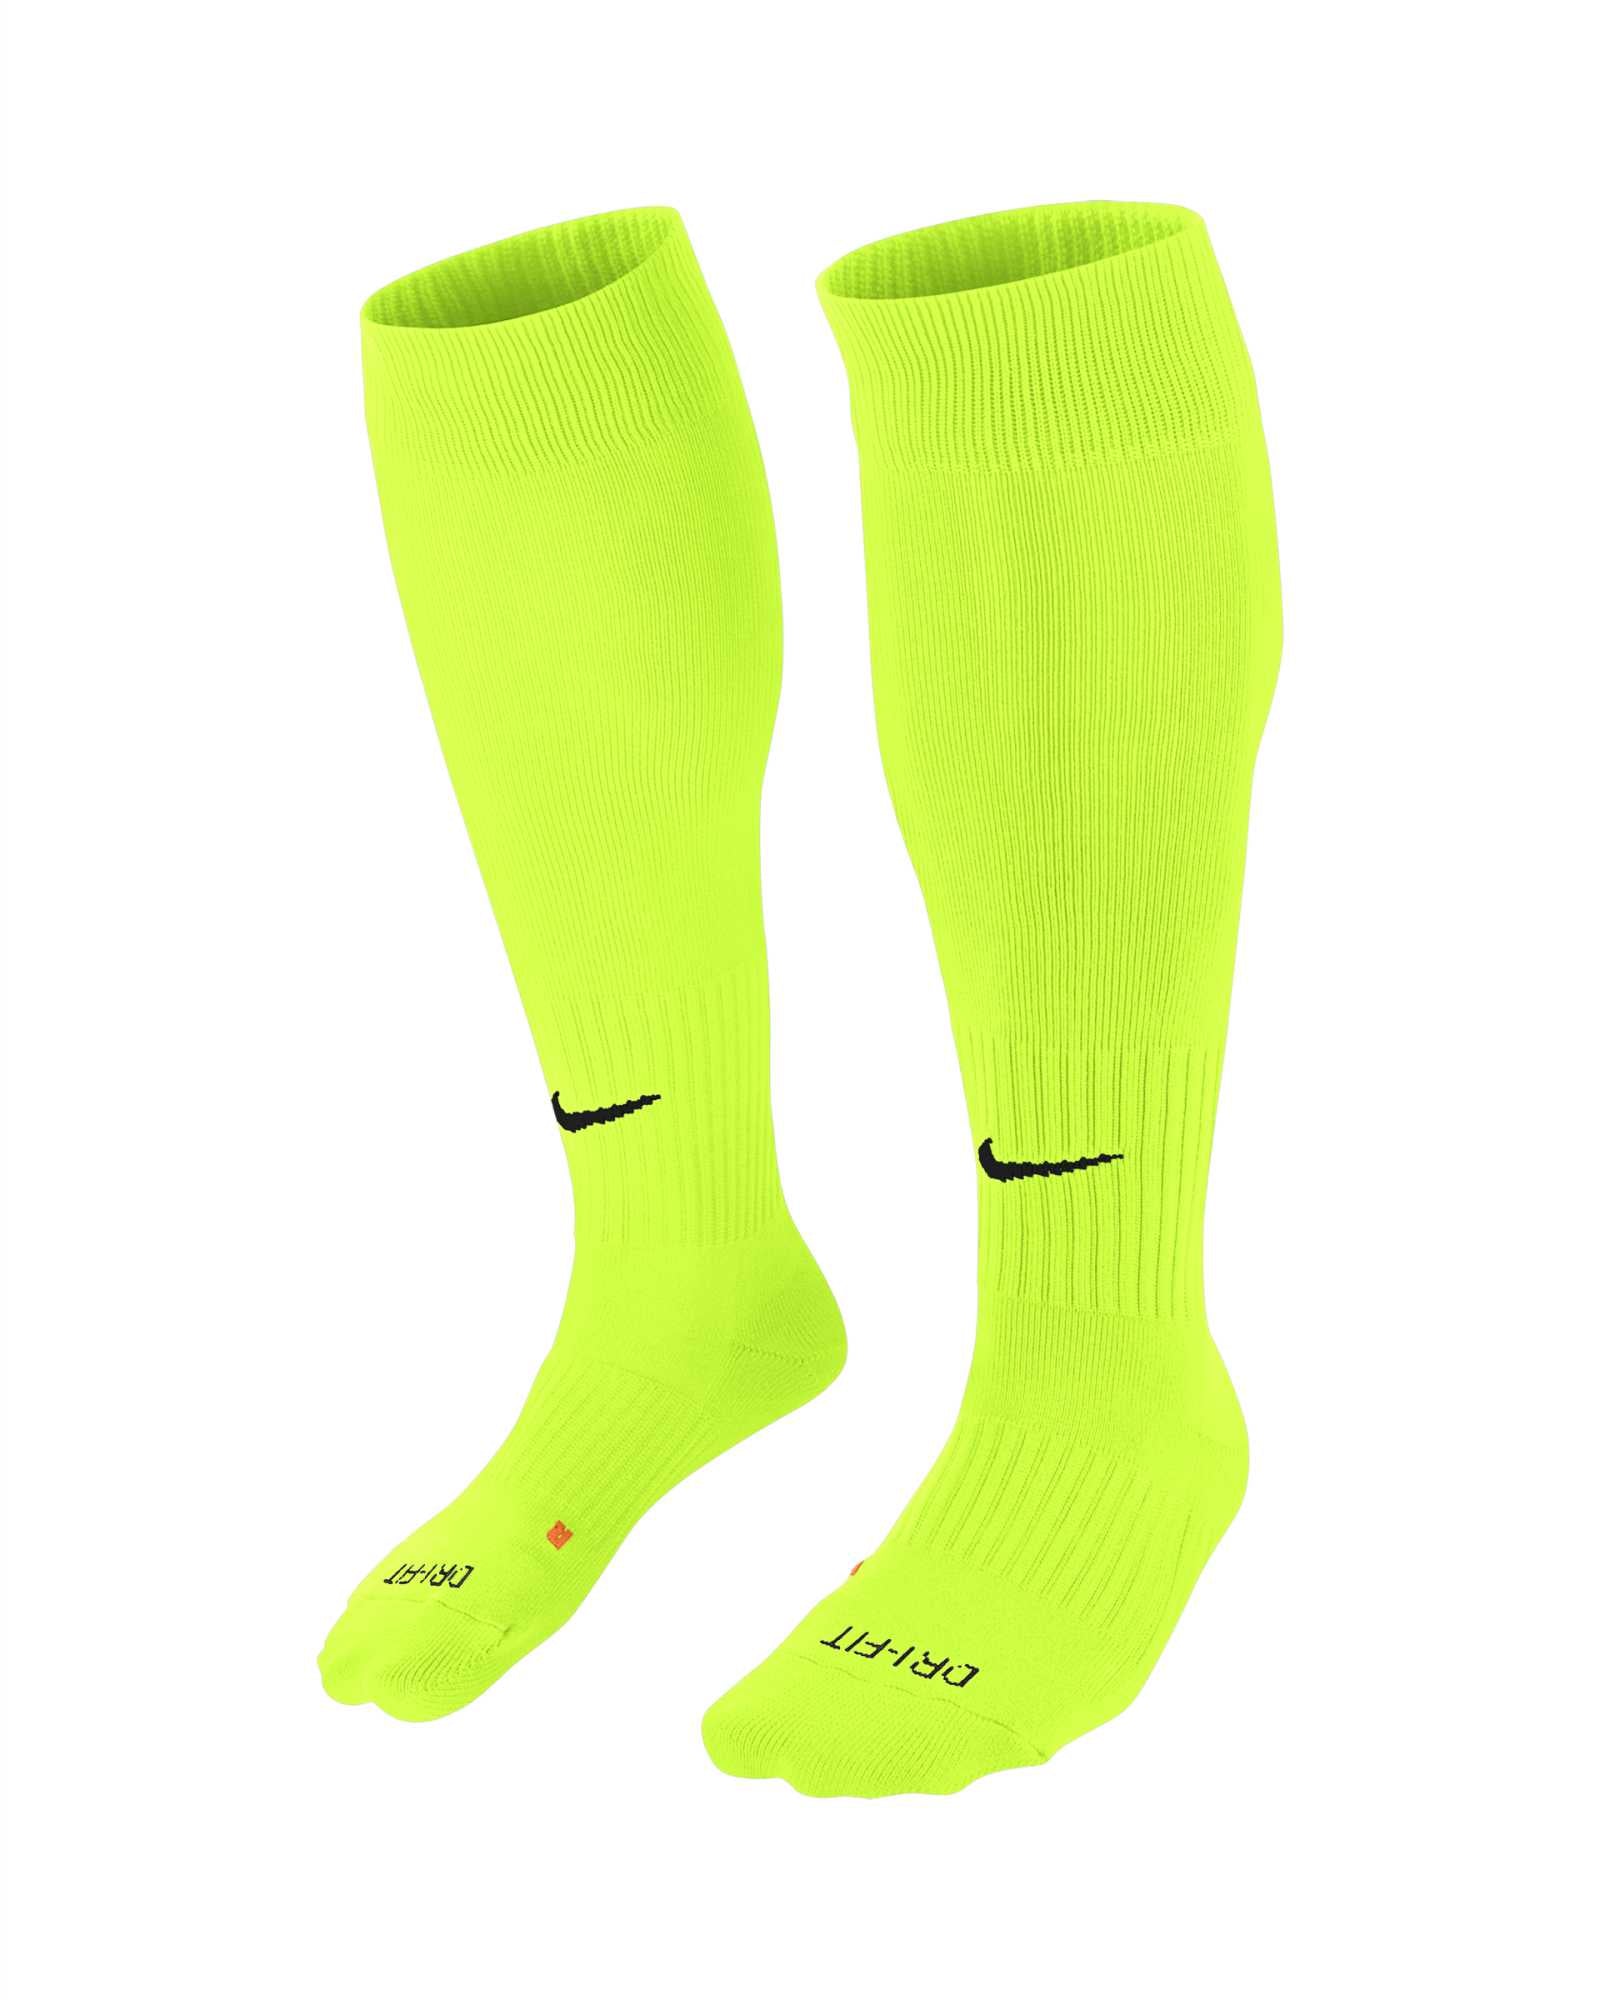 Merley Cobham Away - Nike Classic II Sock